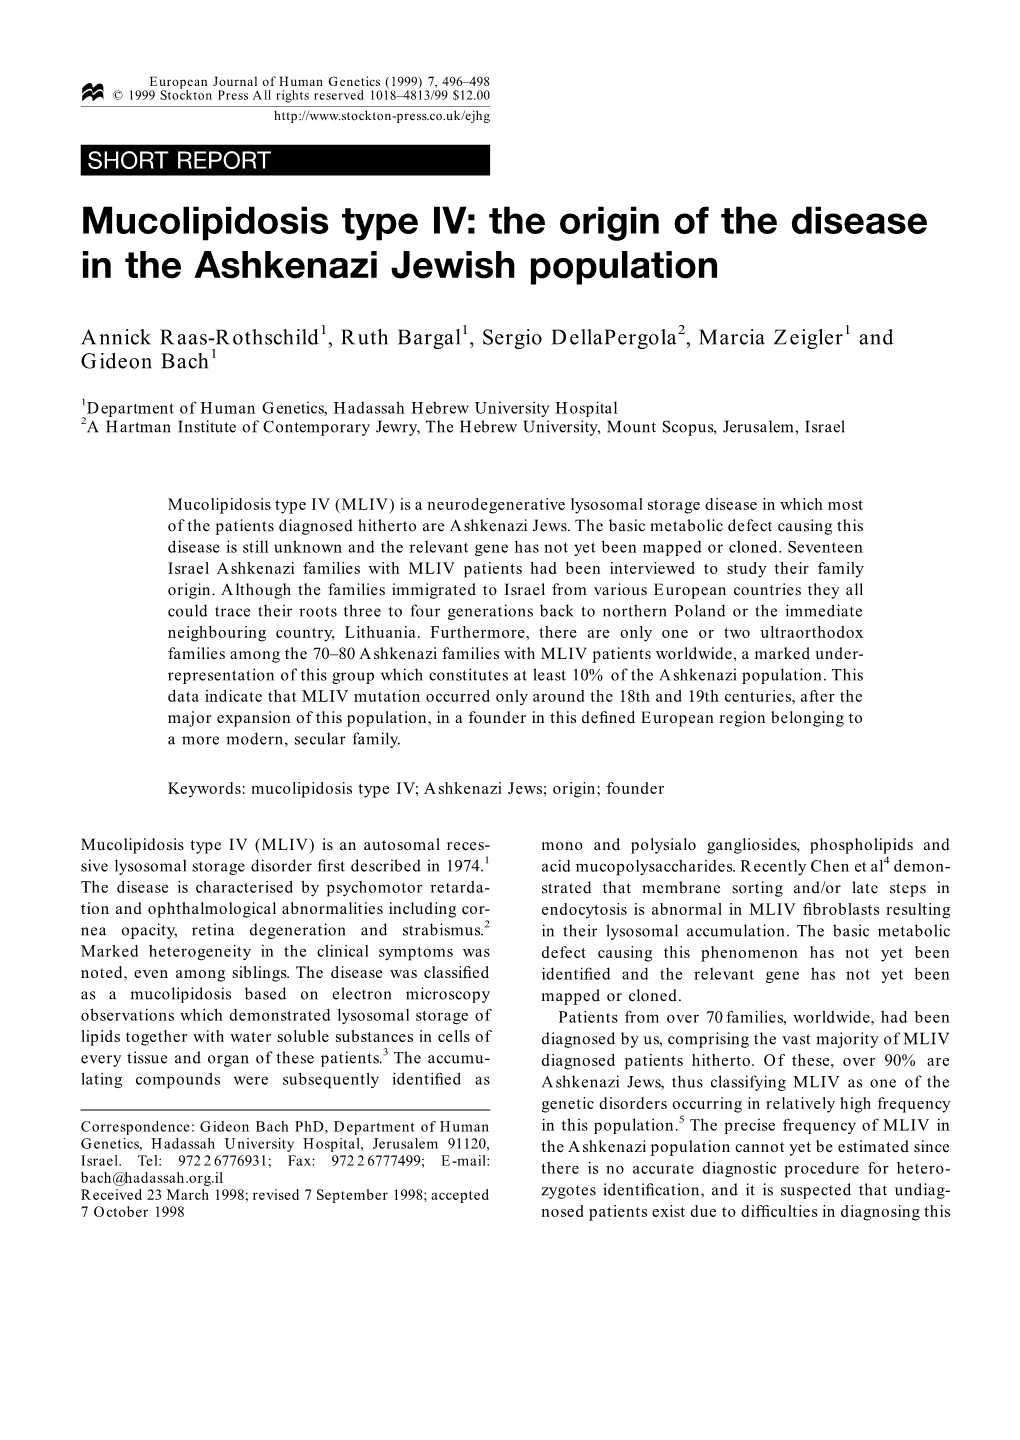 Mucolipidosis Type IV: the Origin of the Disease in the Ashkenazi Jewish Population